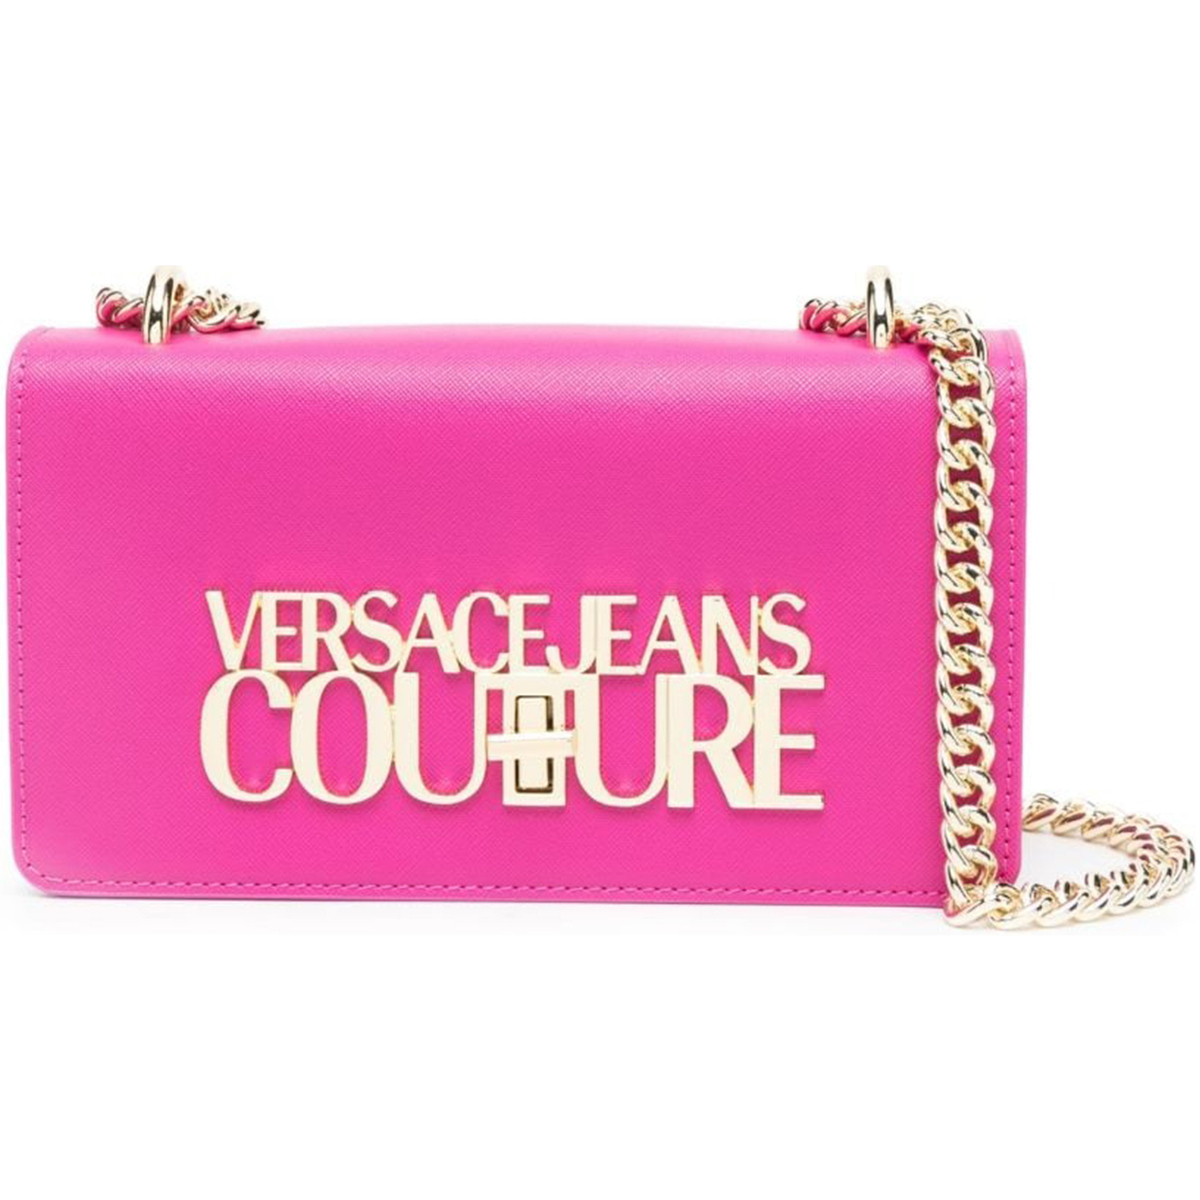 Versace Jeans Couture Rose 75va4bl1zs467-312 rSYrIj4w